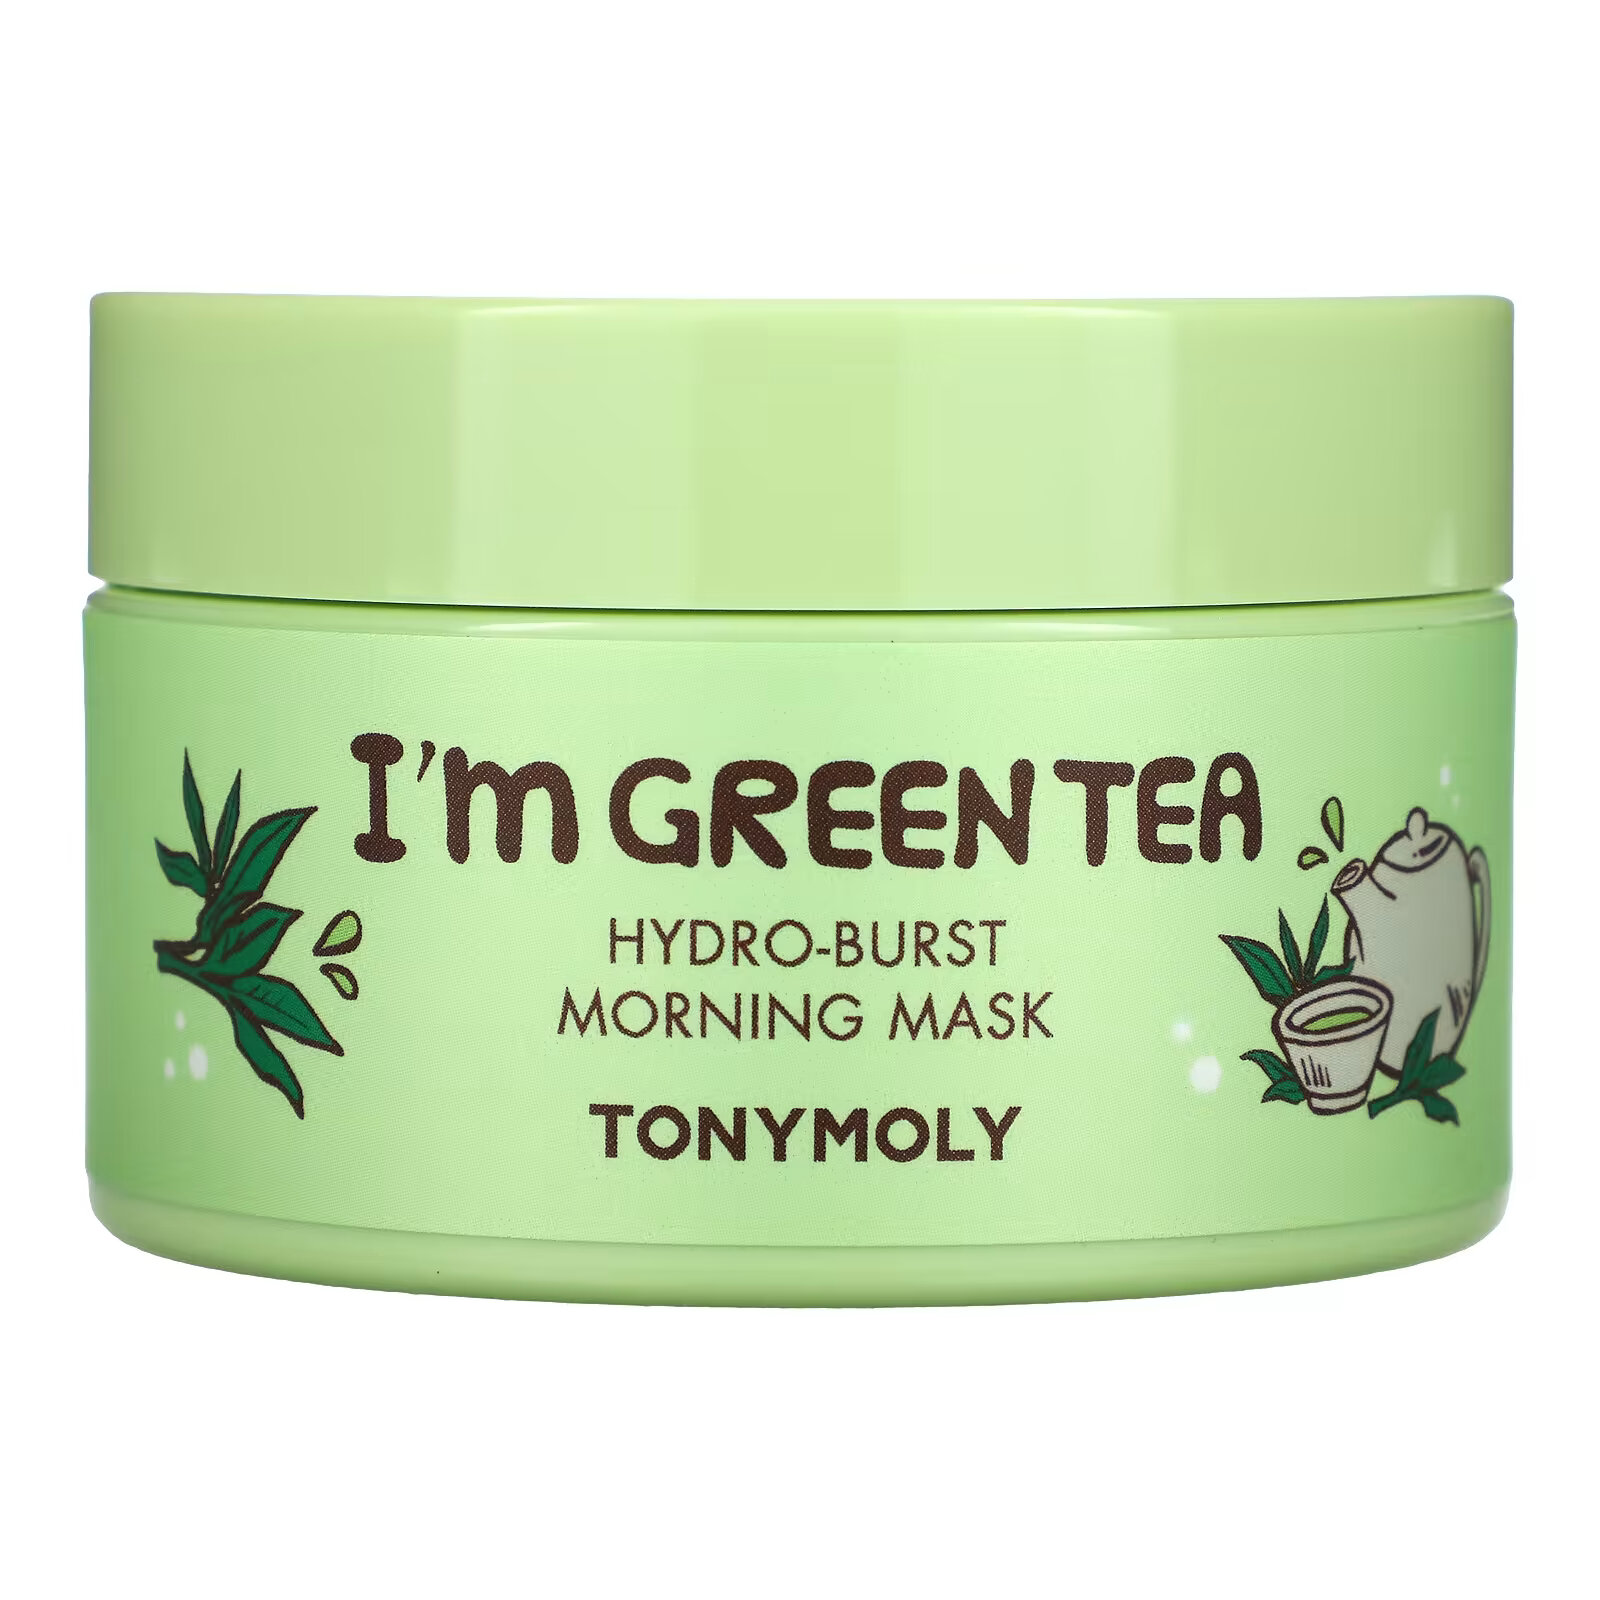 Tony Moly, I'm Green Tea, утренняя маска для лица Hydro-Burst, 100 г (3,52 унции) tony moly i m green tea утренняя маска для лица hydro burst 100 г 3 52 унции